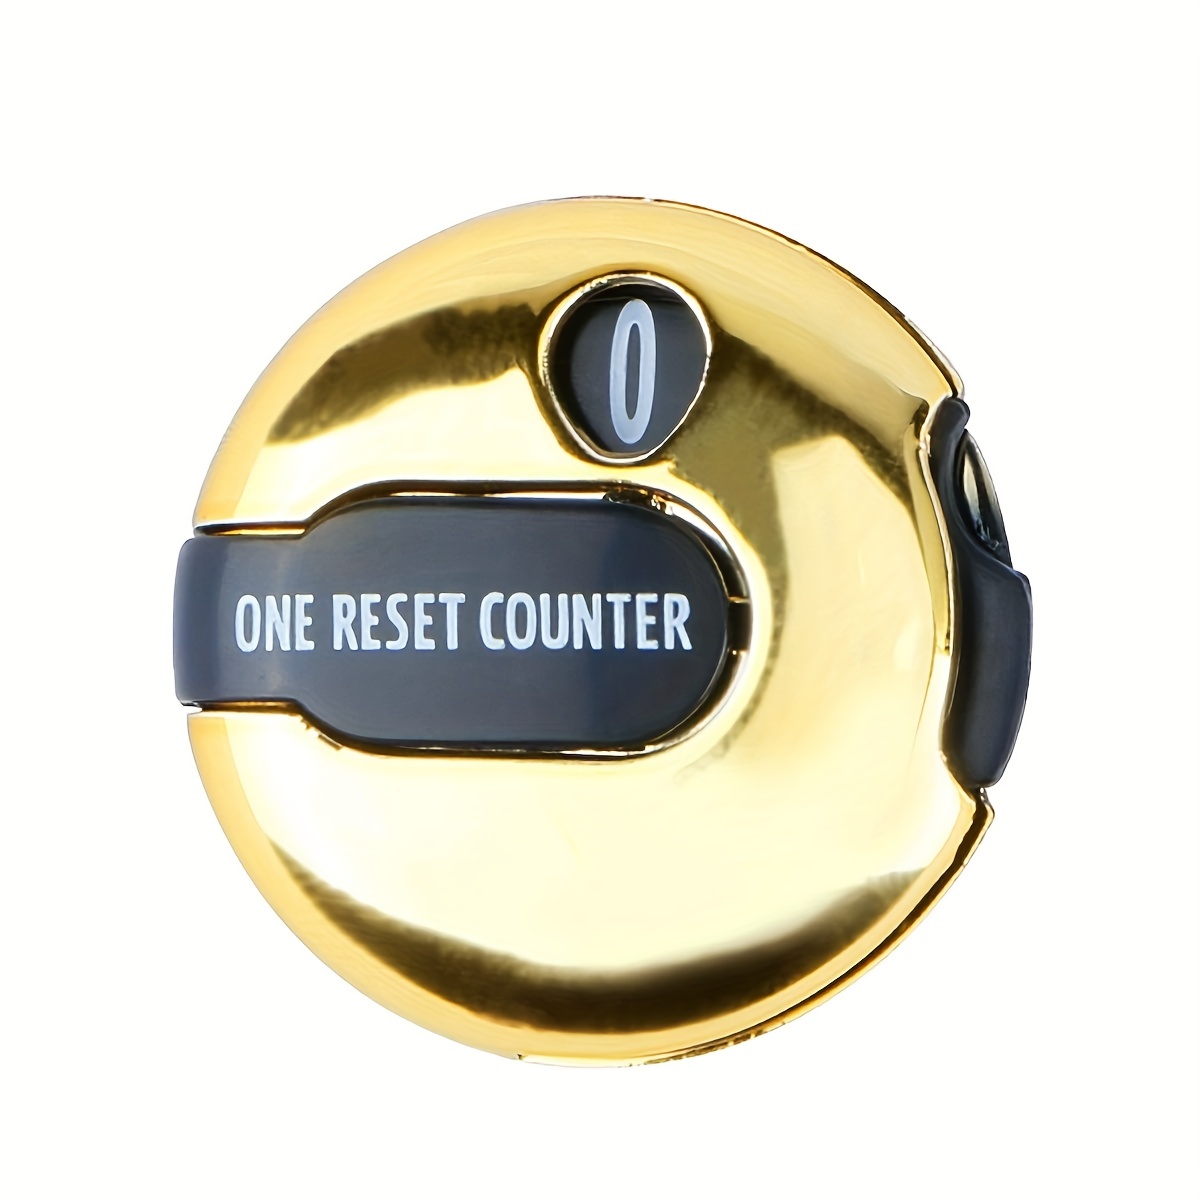 Simple Counter Button